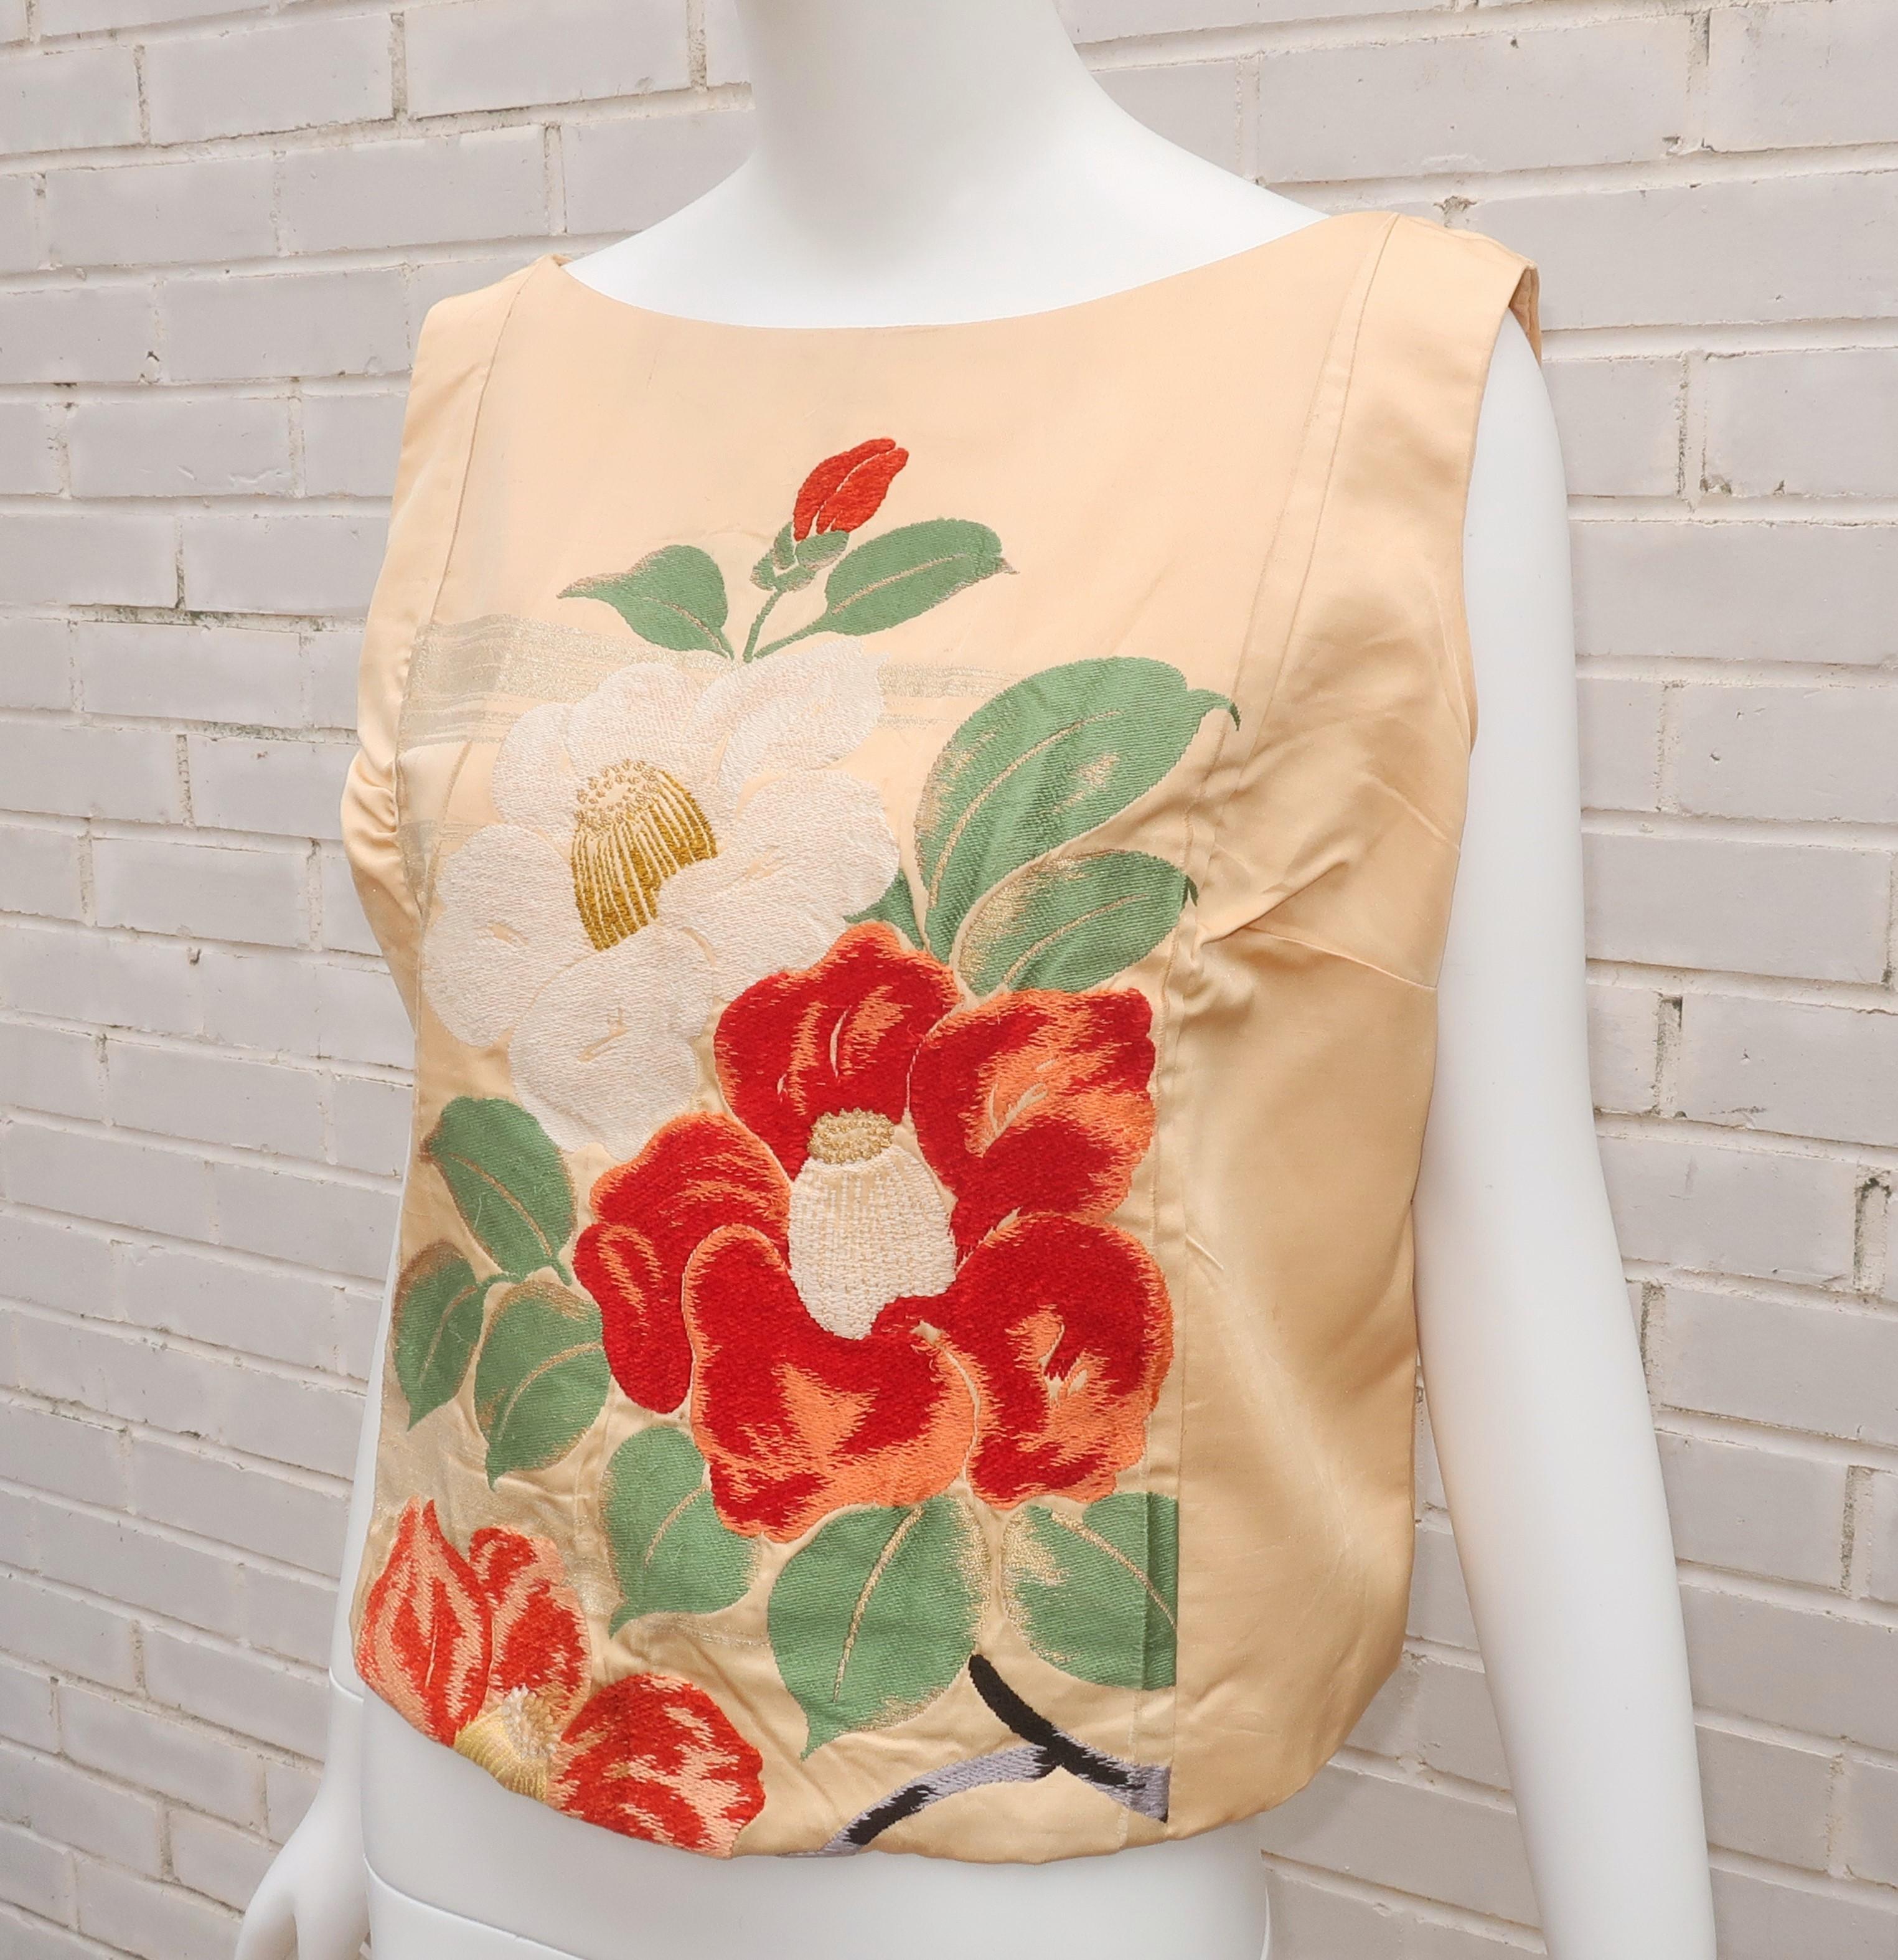 Beige Custom Obi Creme Top With Floral Design, C.1950